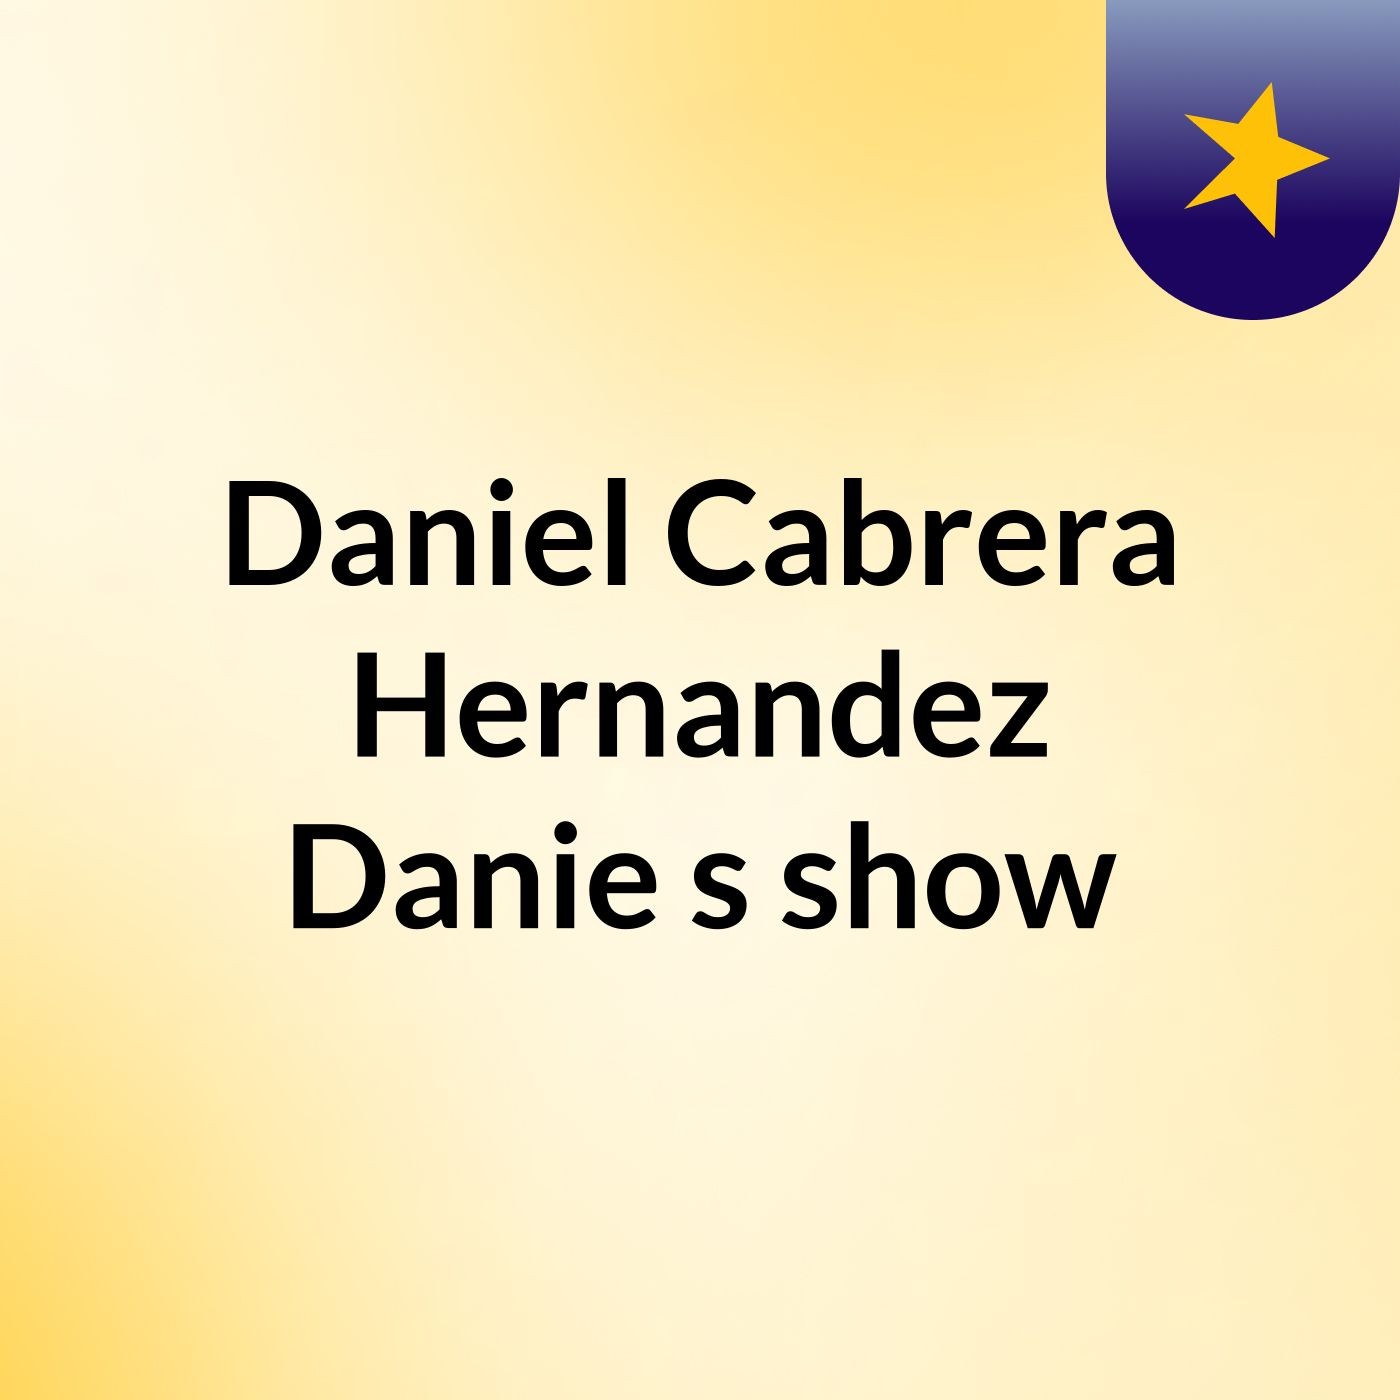 Daniel Cabrera Hernandez Danie's show